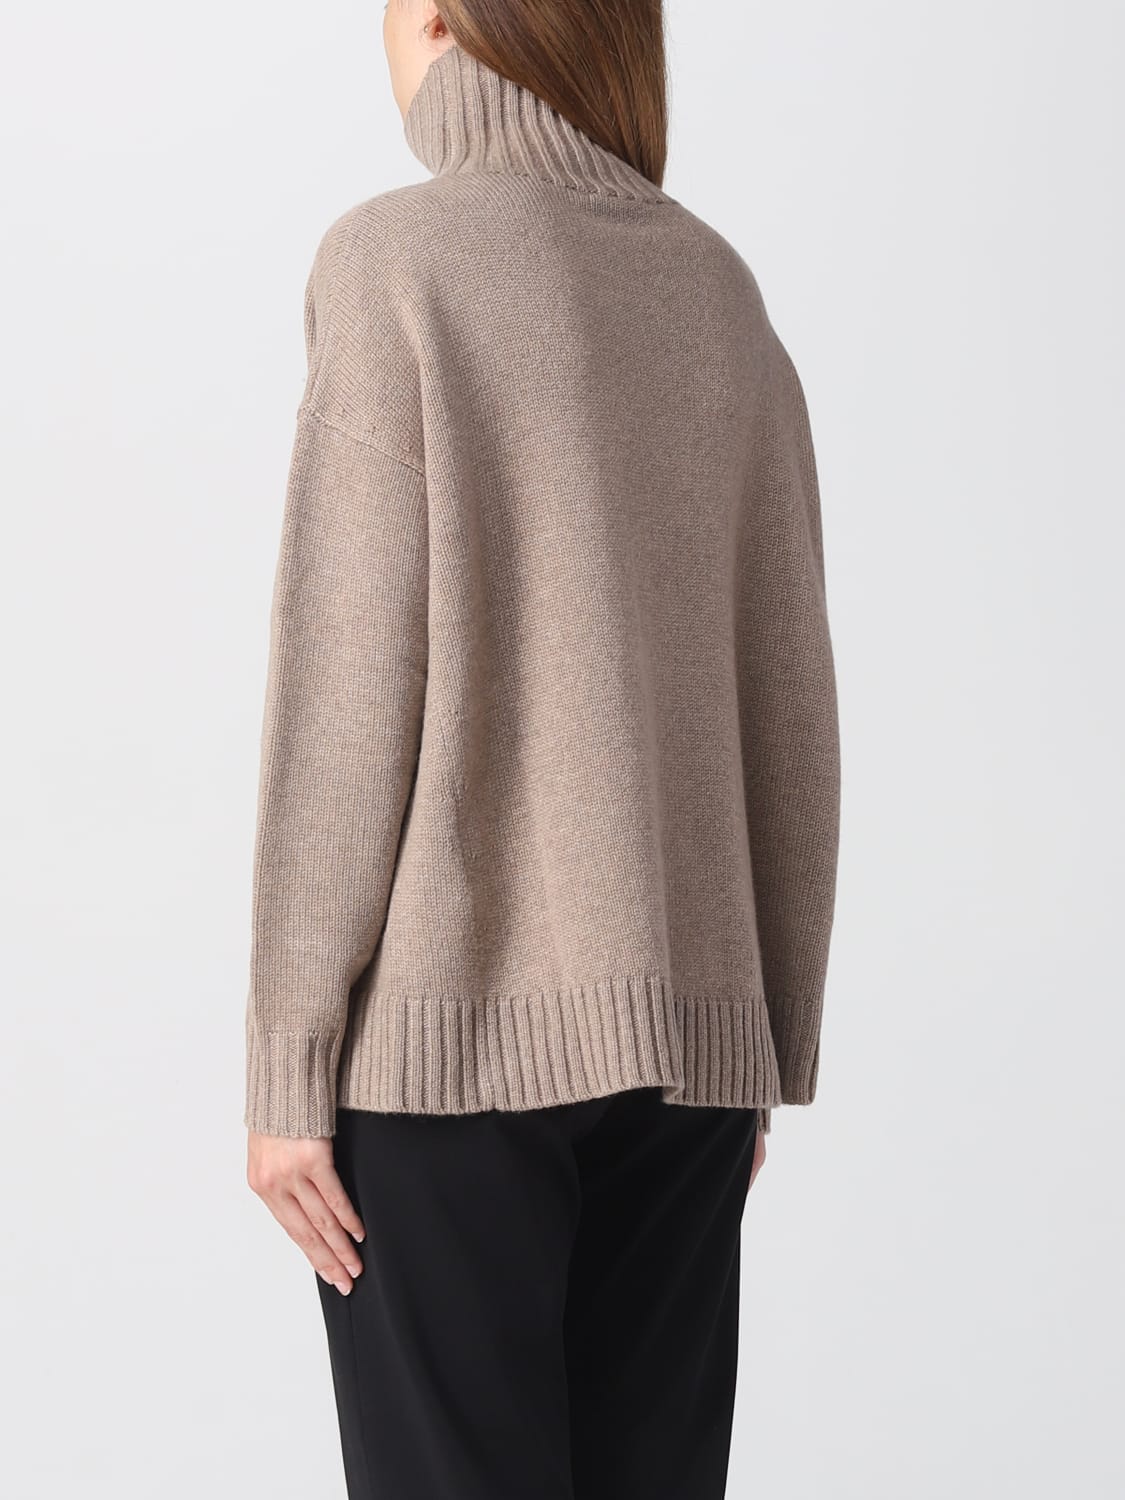 MAX MARA: sweater in wool and cashmere blend - Dove Grey | Max Mara ...